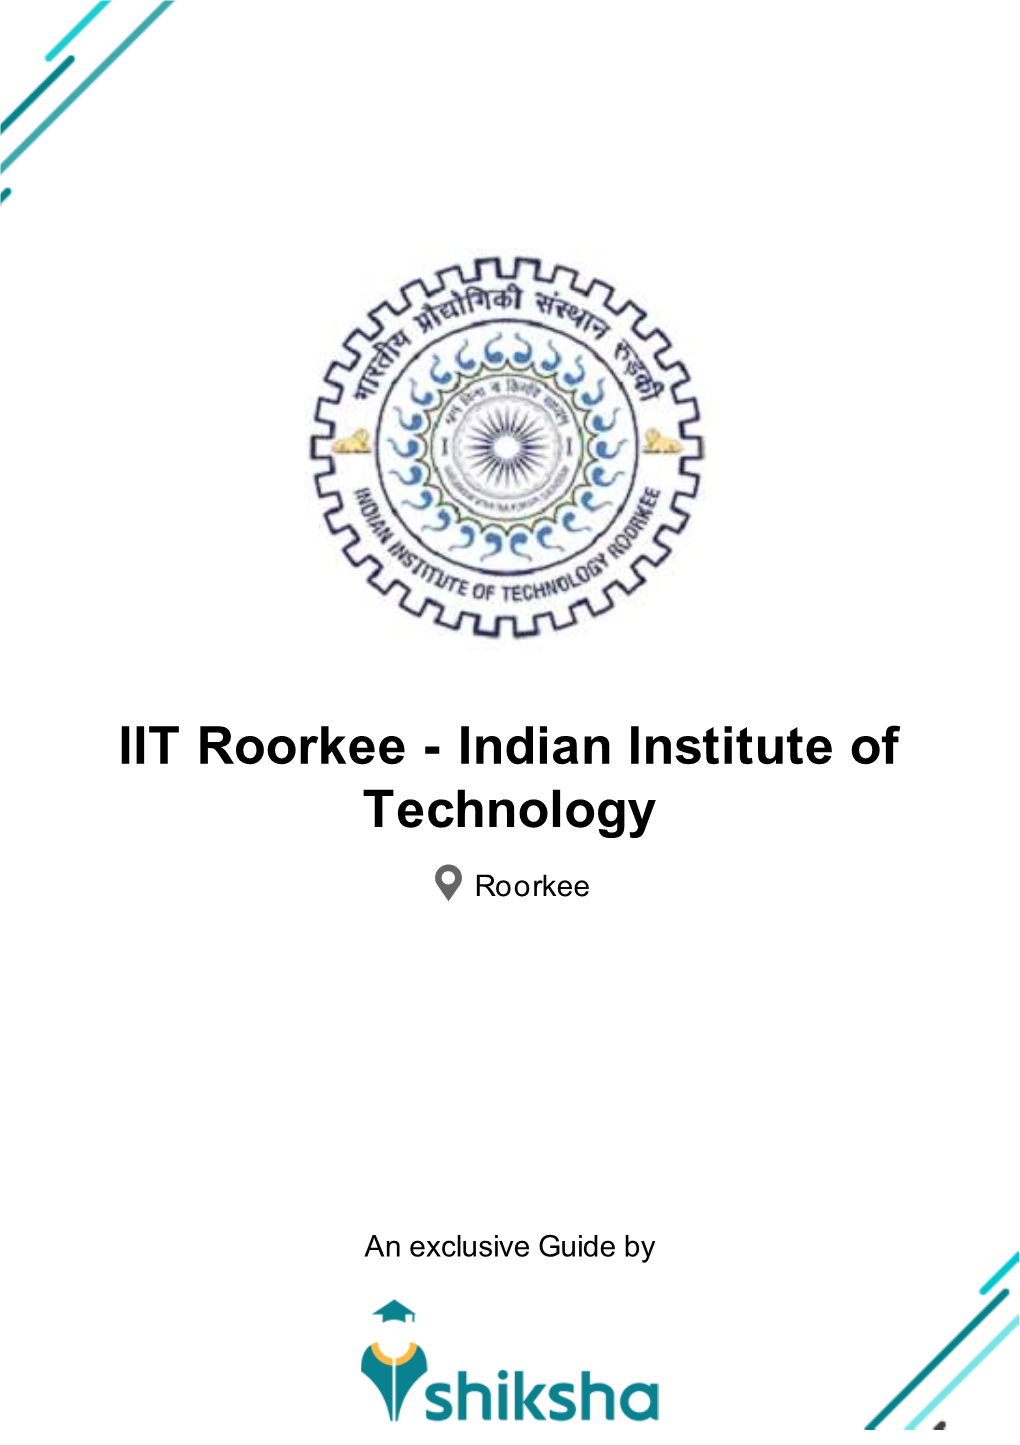 IIT Roorkee - Indian Institute of Technology